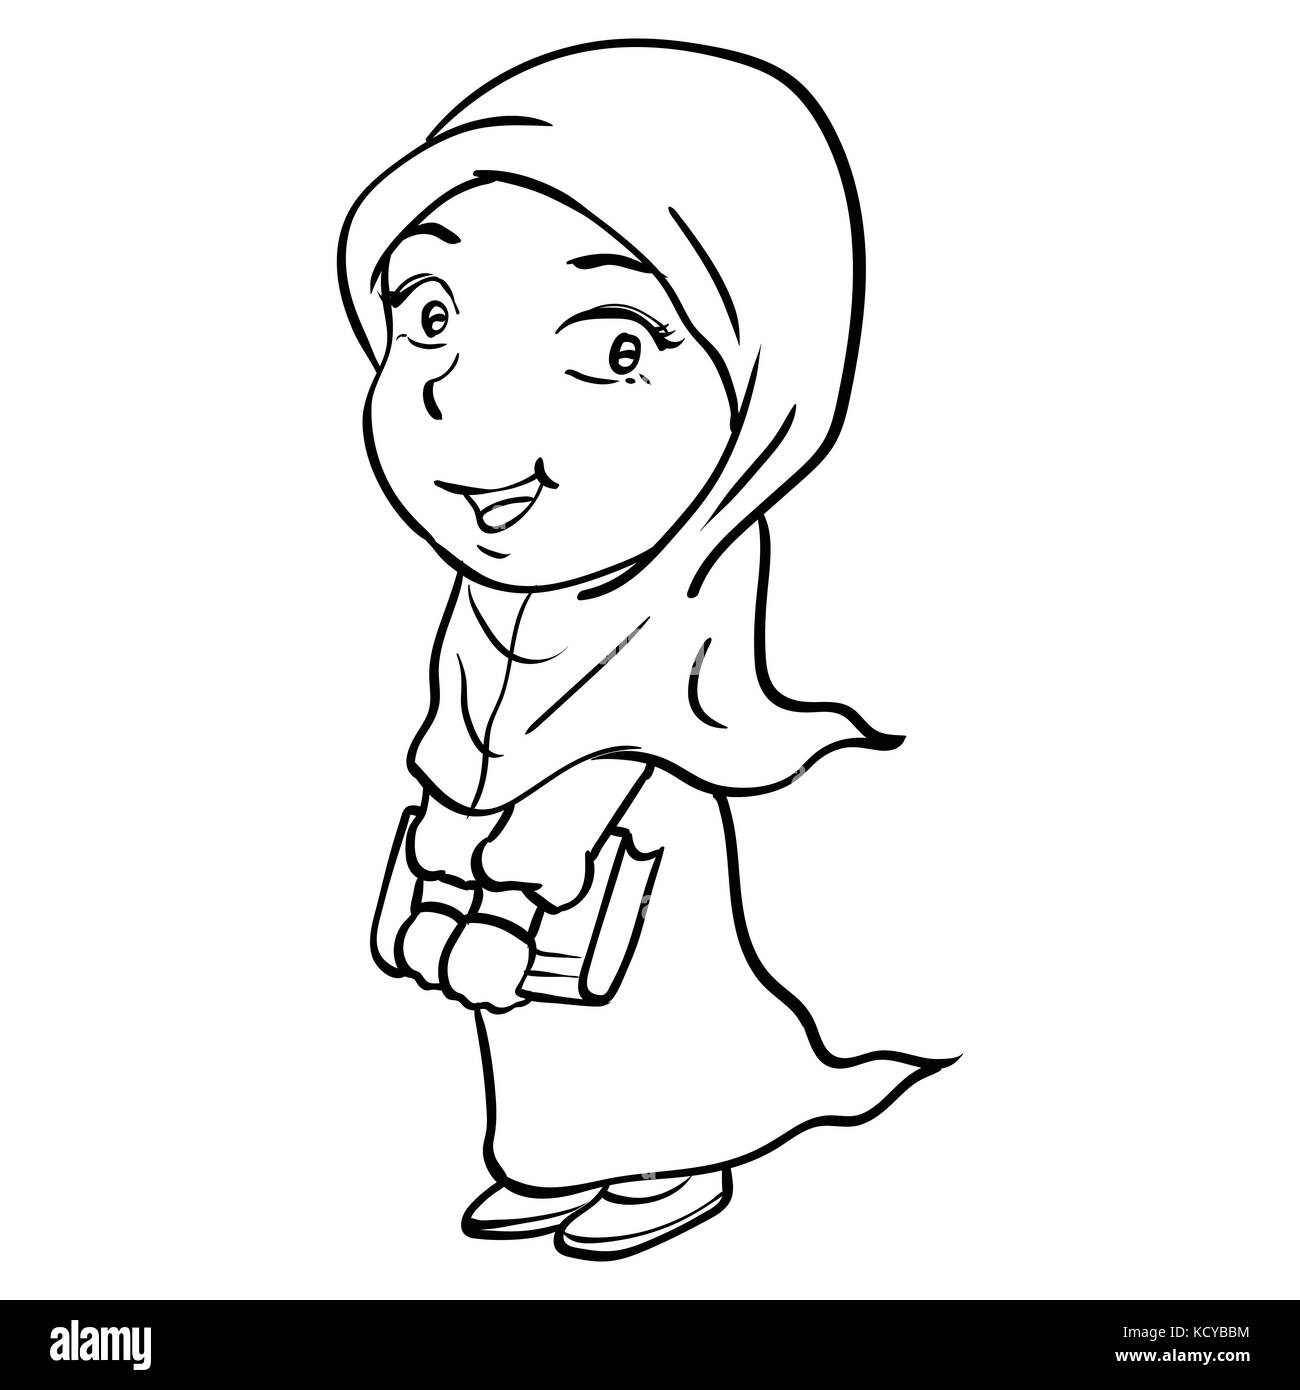 Dessin à La Main De Dessin Animé Smiley Fille Musulmane